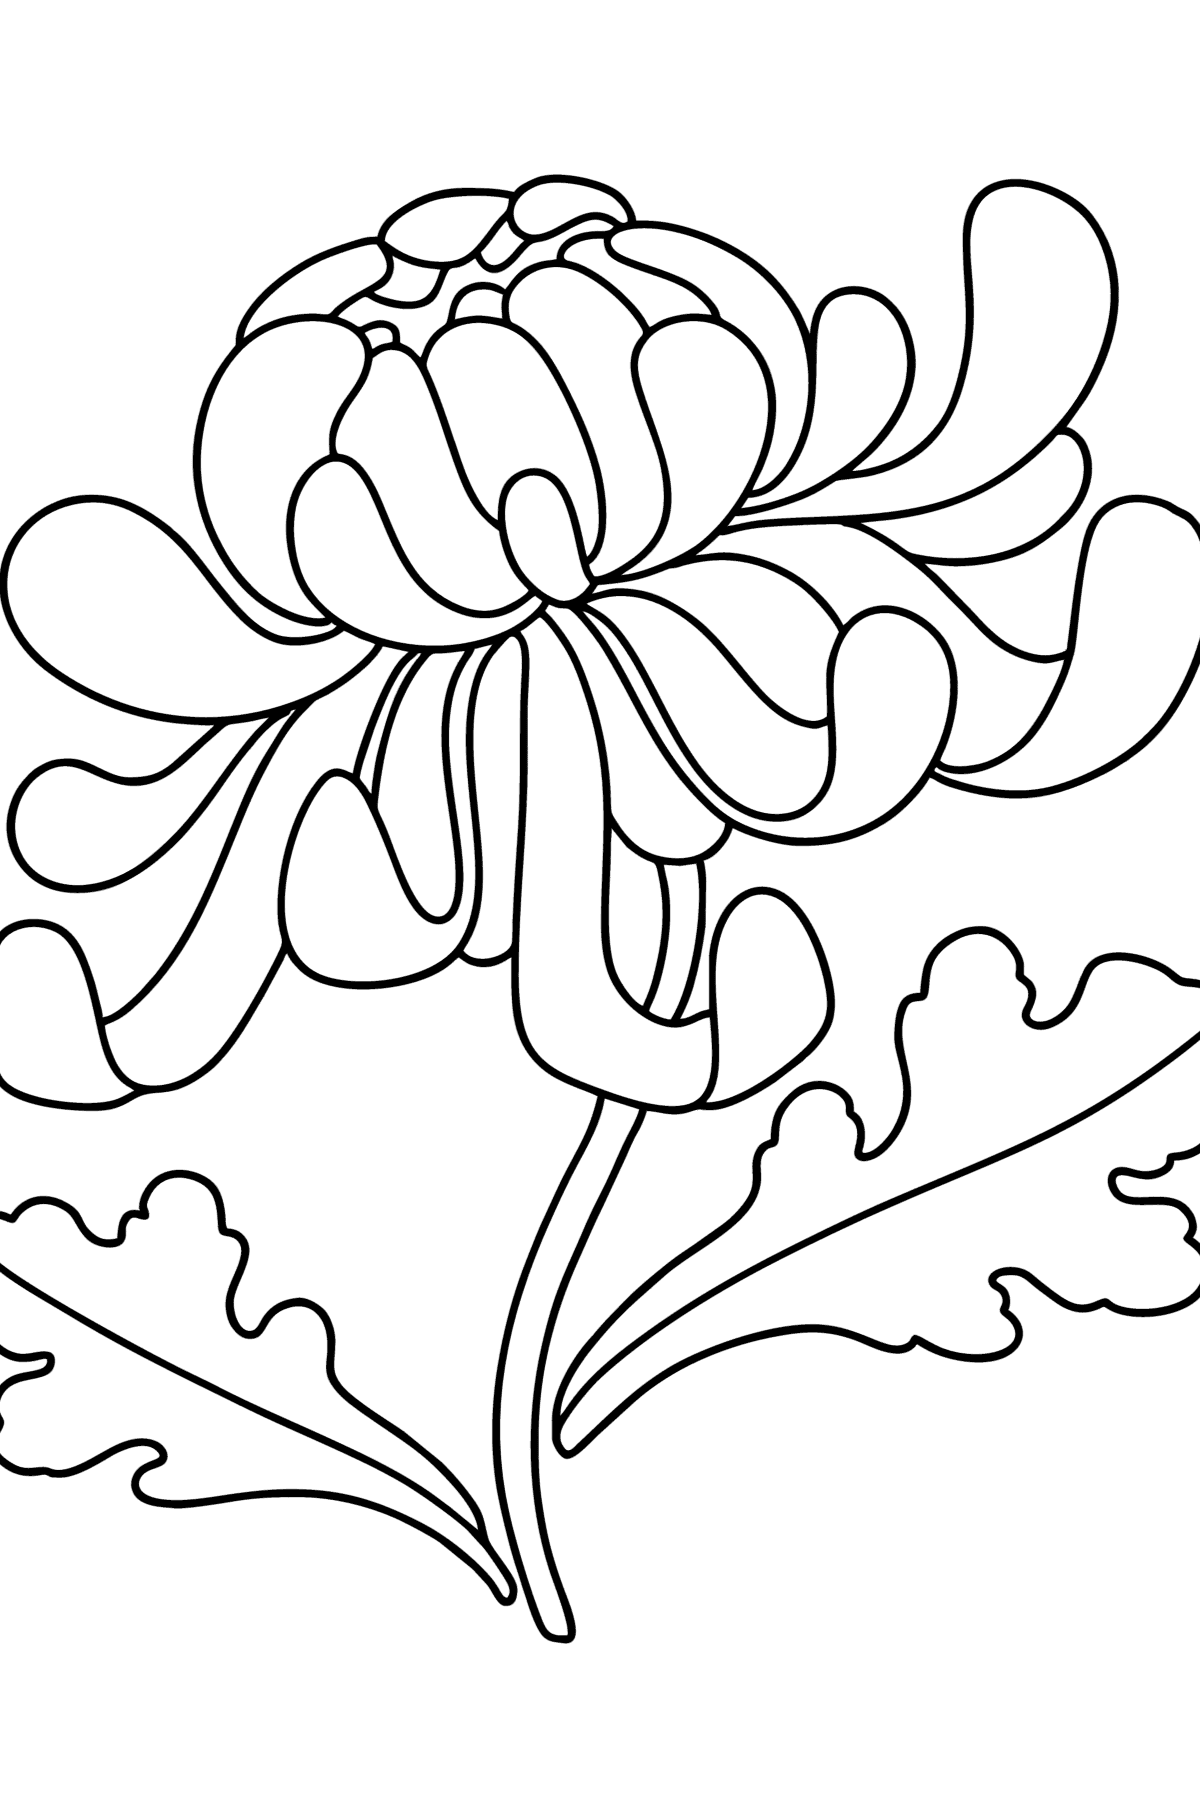 Розмальовка Хризантеми - Розмальовки для дітей